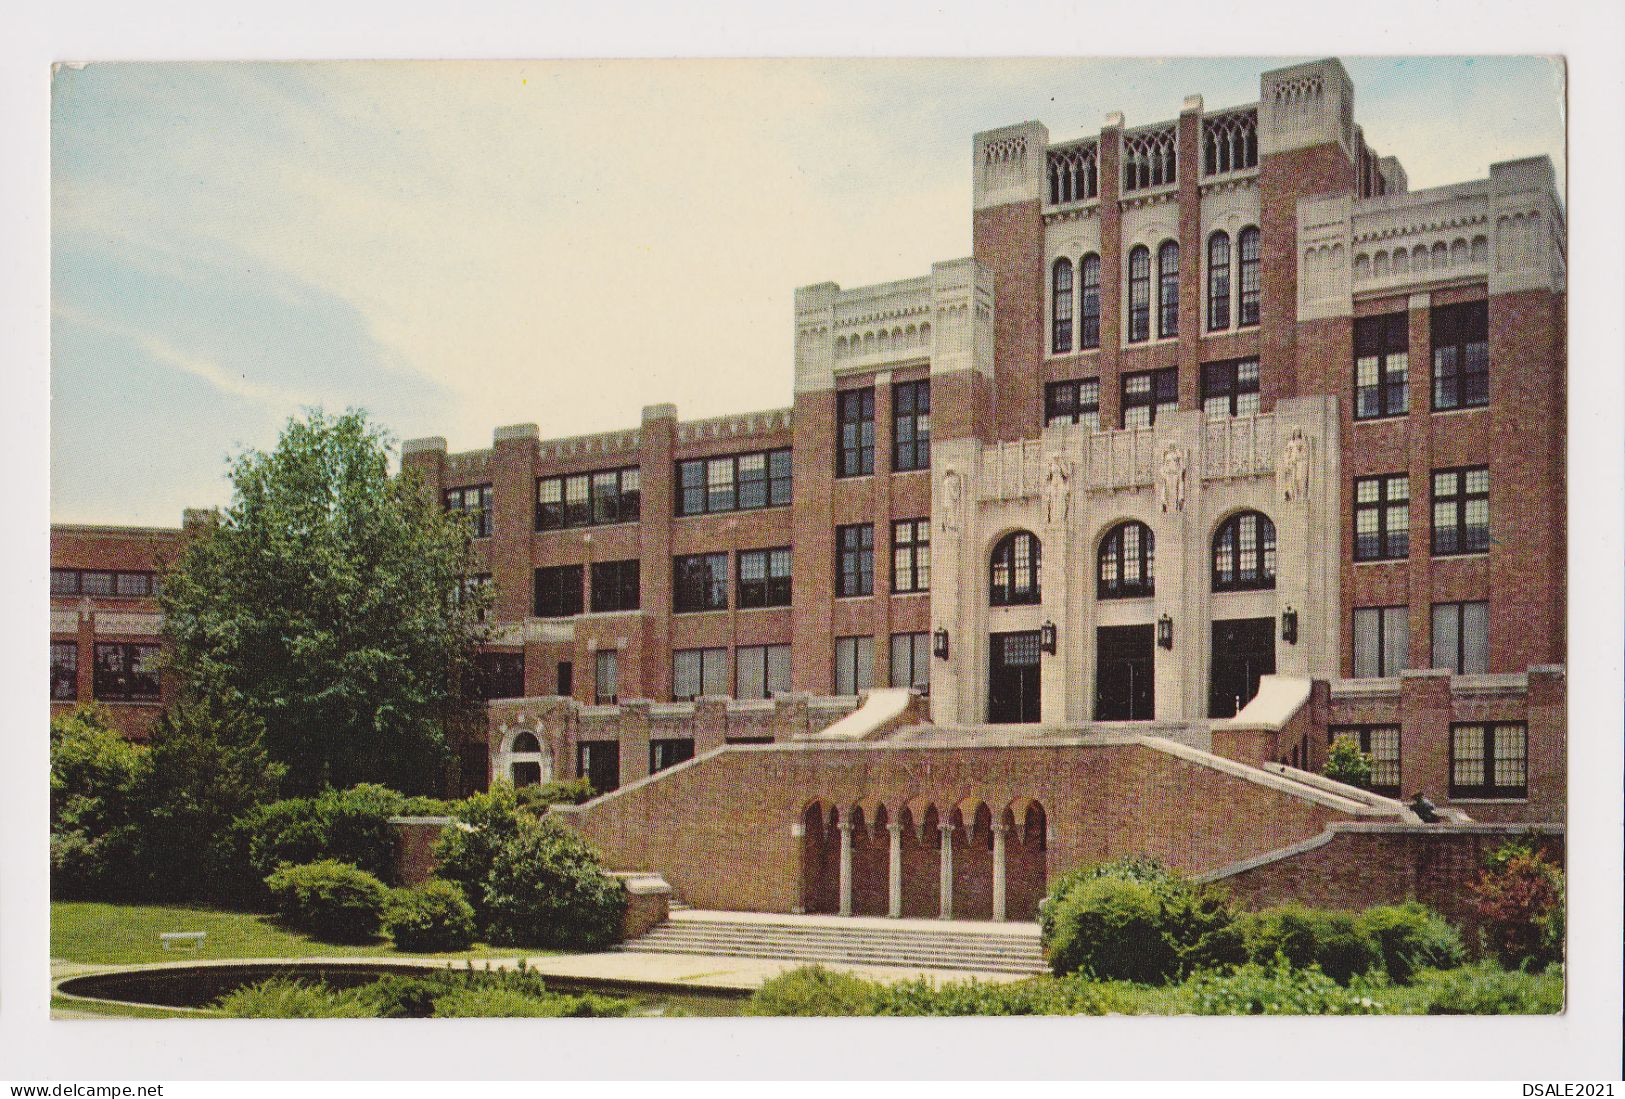 USA United States CENTRAL HIGH SCHOOL In LITTLE ROCK, Arkansas, View Vintage Photo Postcard RPPc AK (42375) - Little Rock